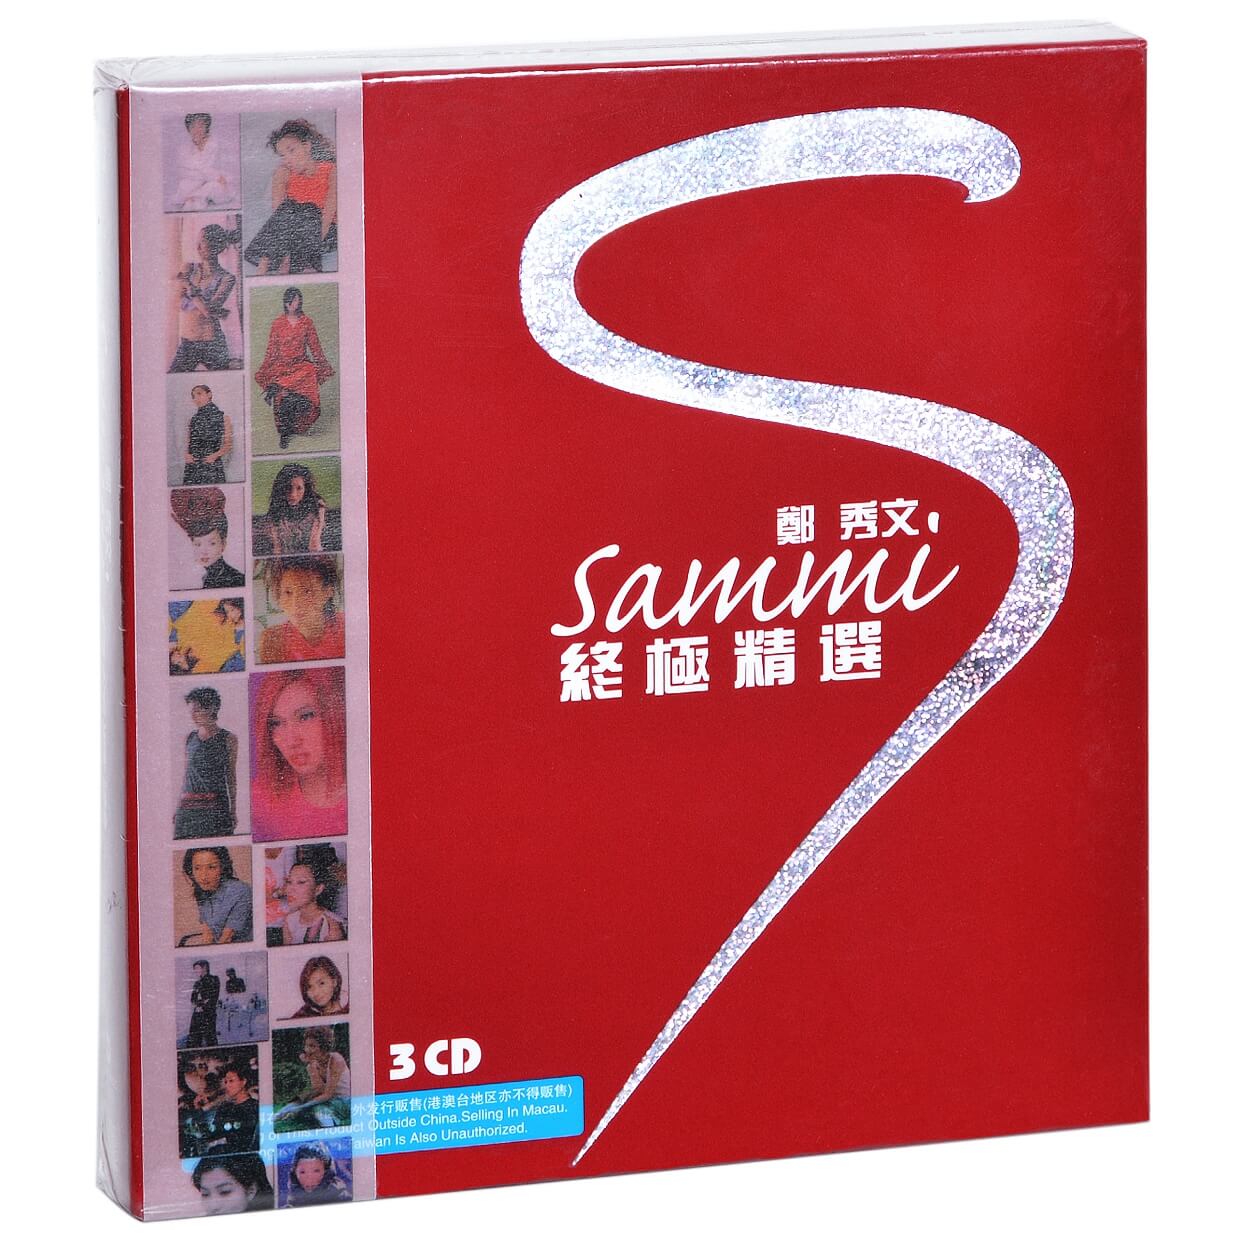 正版郑秀文终极精选 Sammi Ultimate Collection 3CD碟片